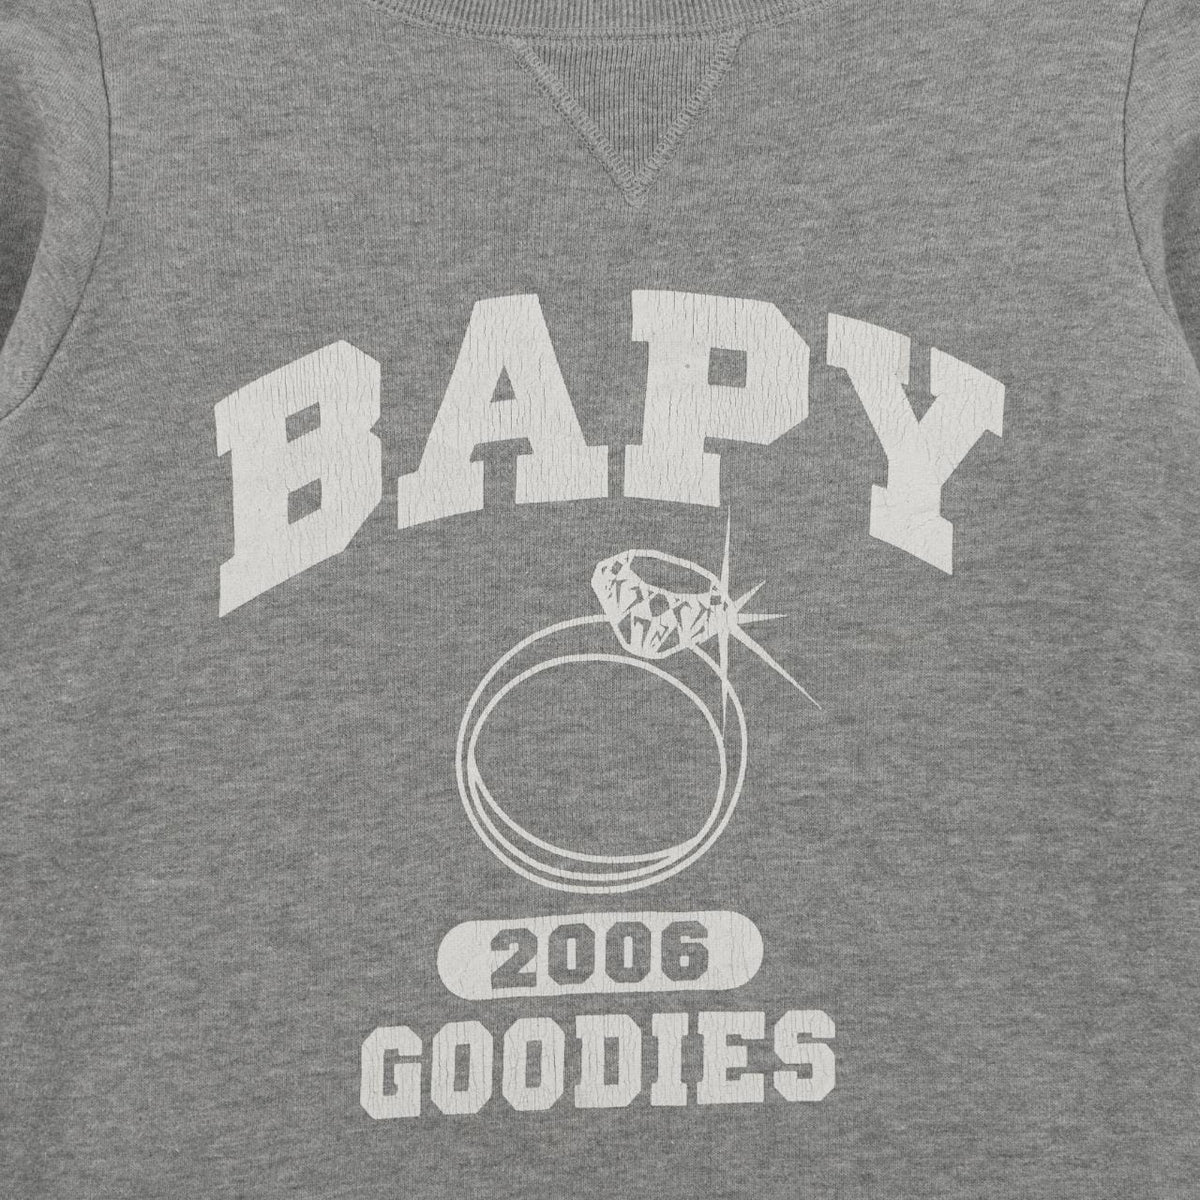 Vintage BAPE BAPY Goodies Sweatshirt Womens Size S